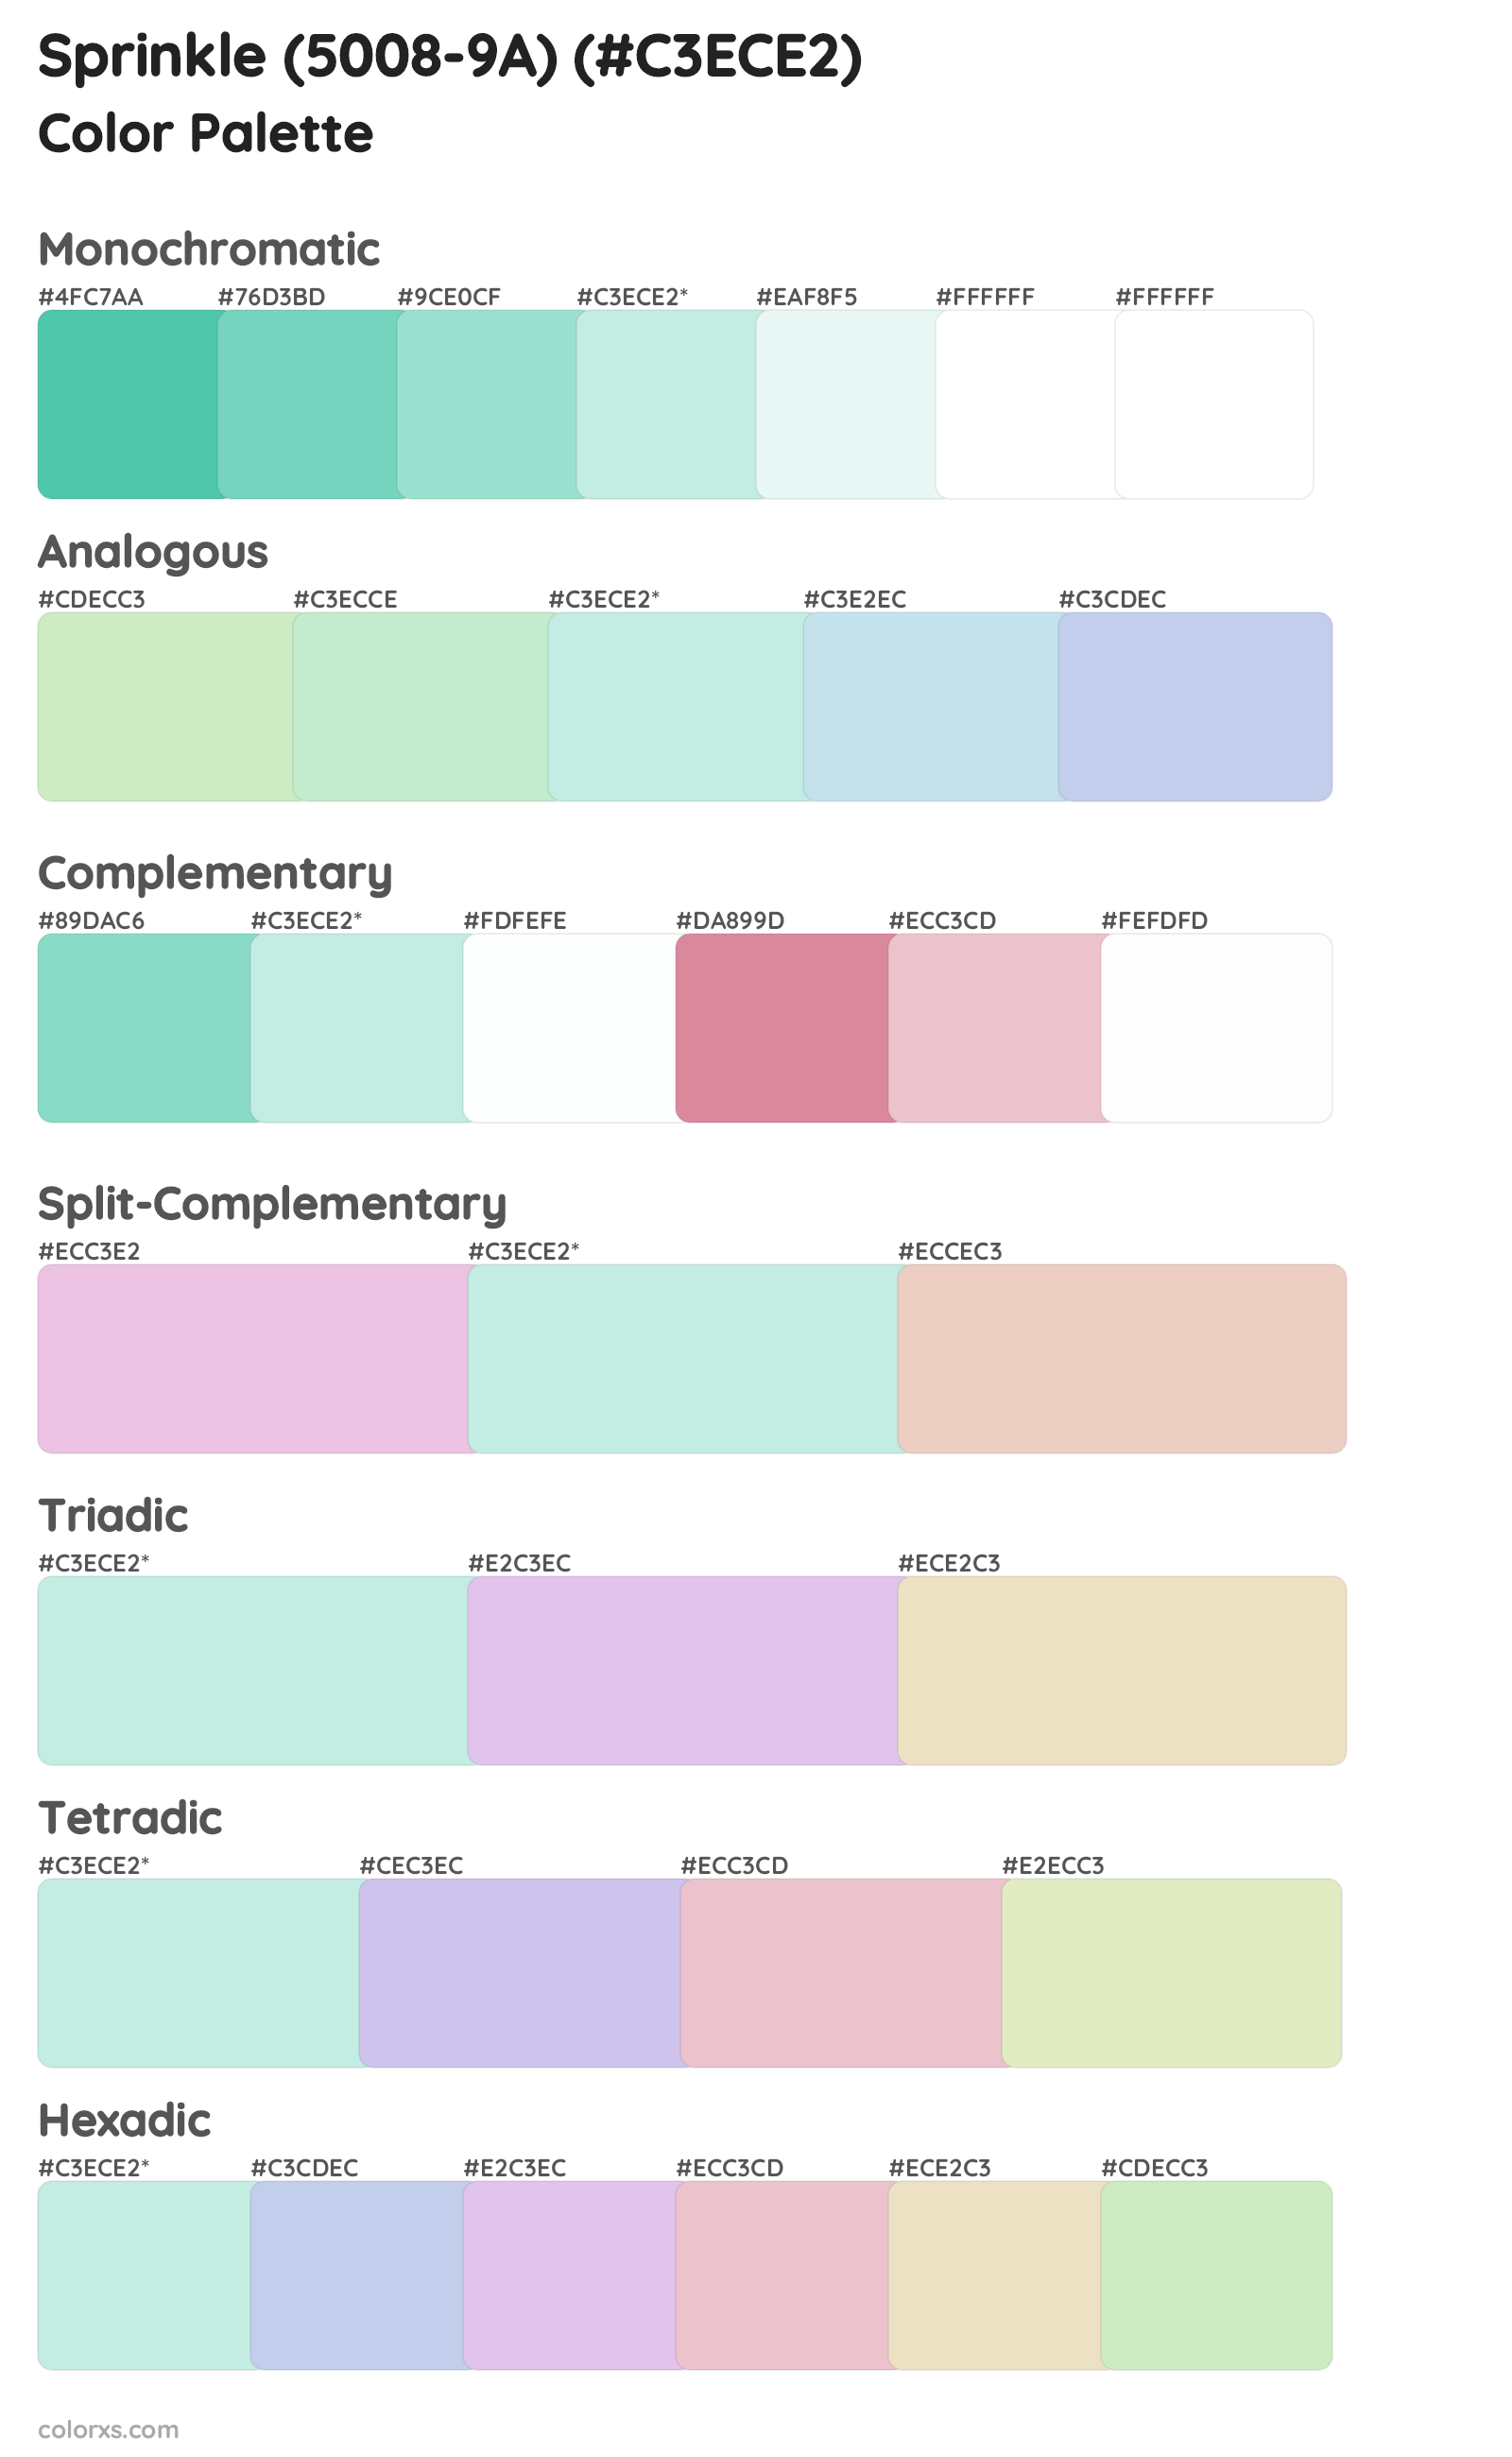 Sprinkle (5008-9A) Color Scheme Palettes